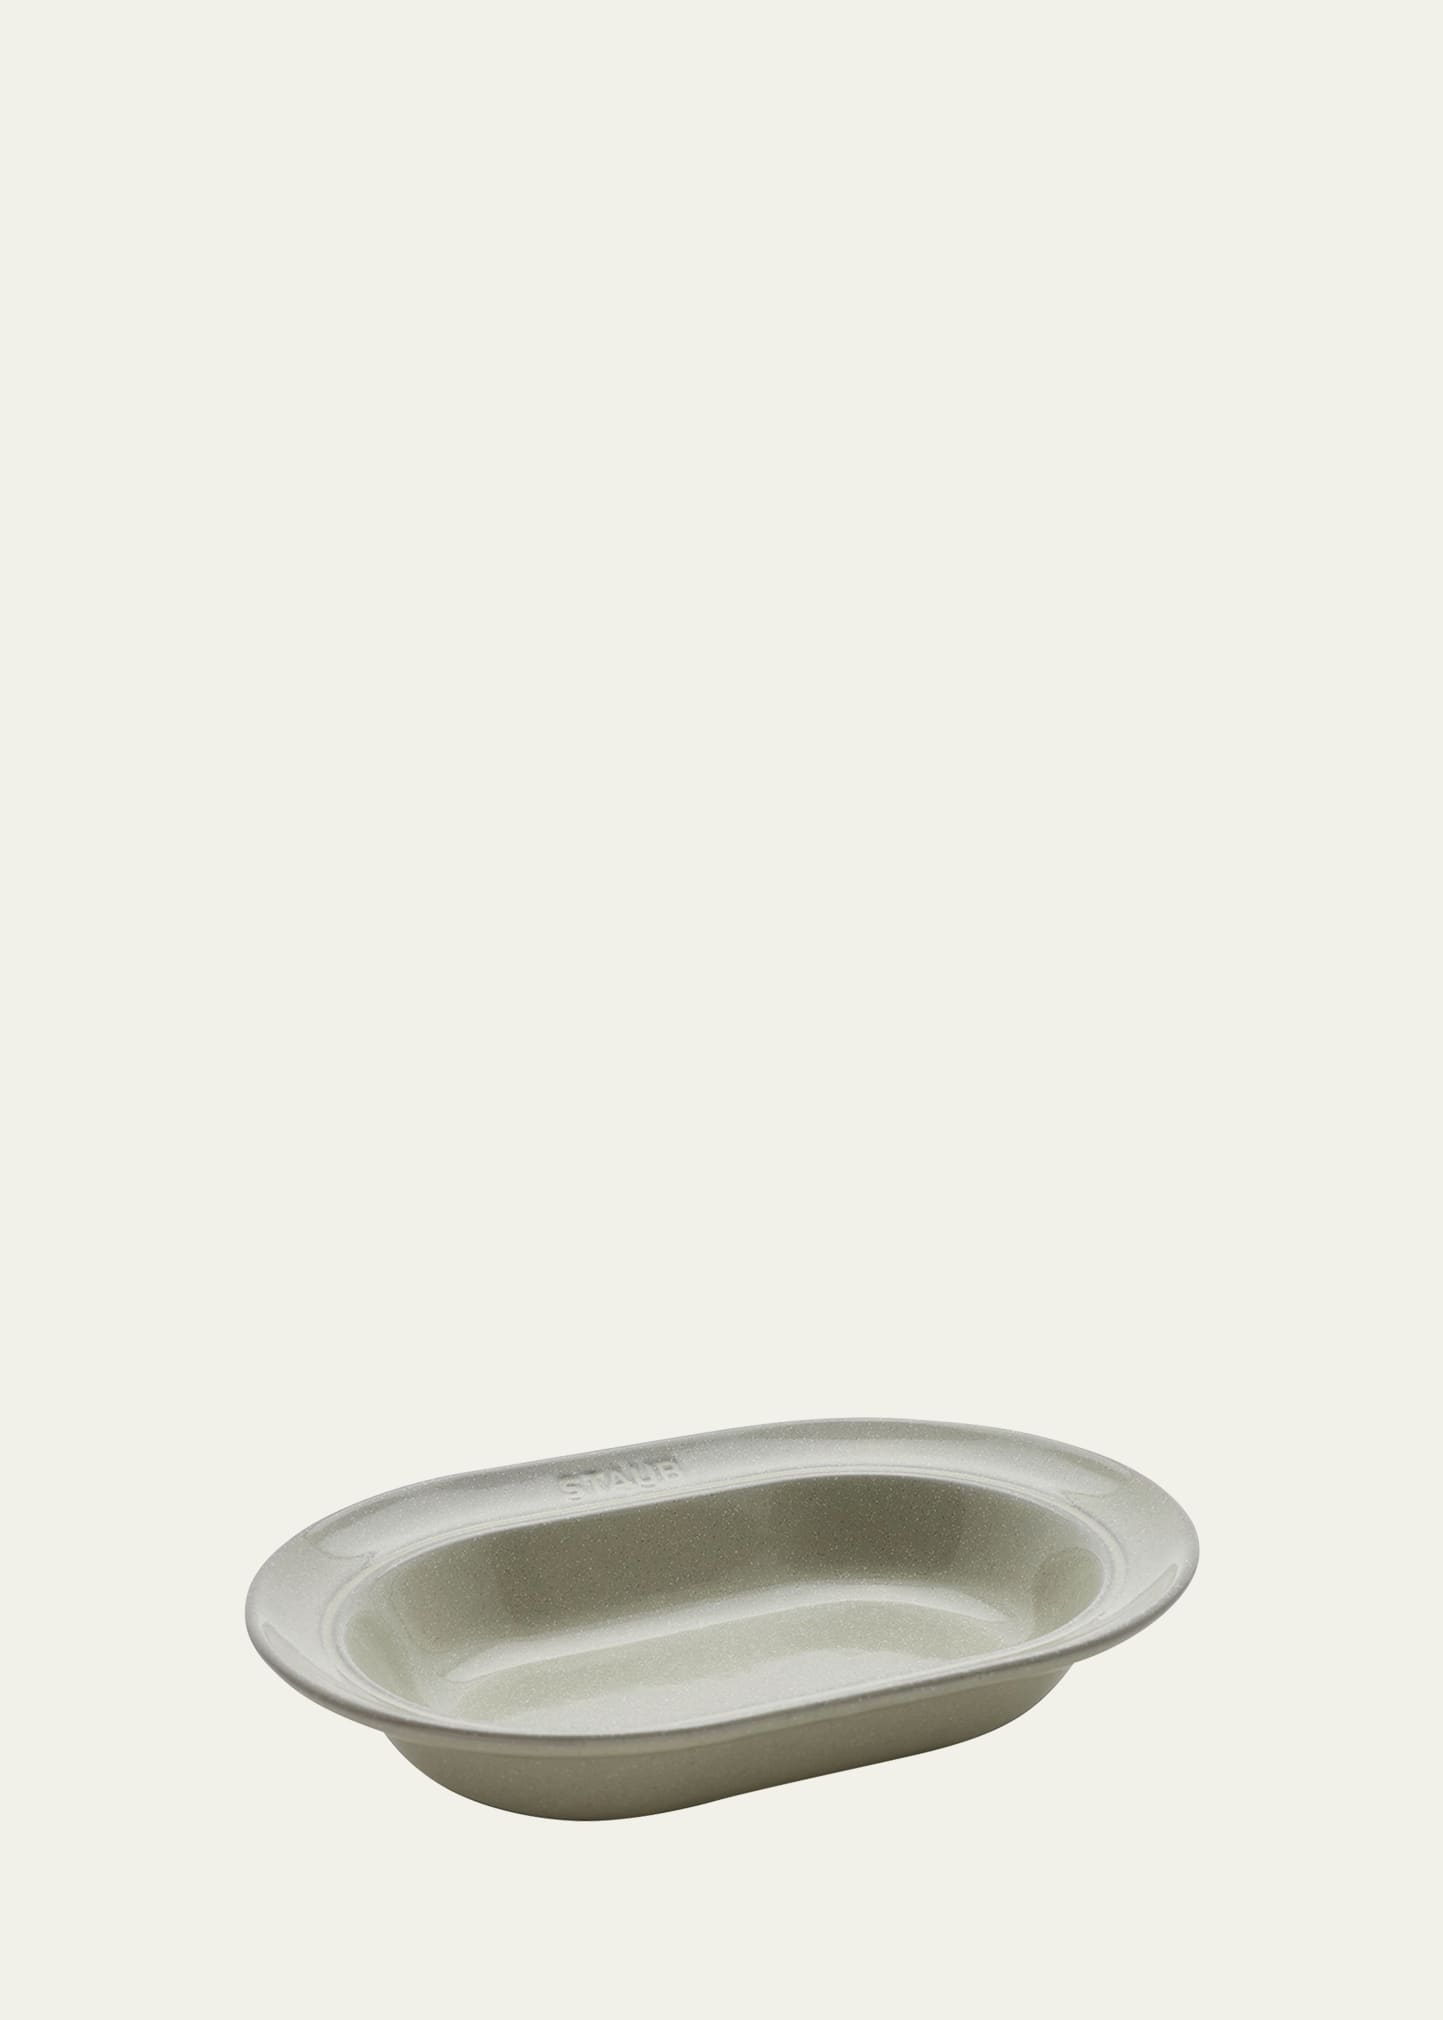 Ceramic Oval Service Dish